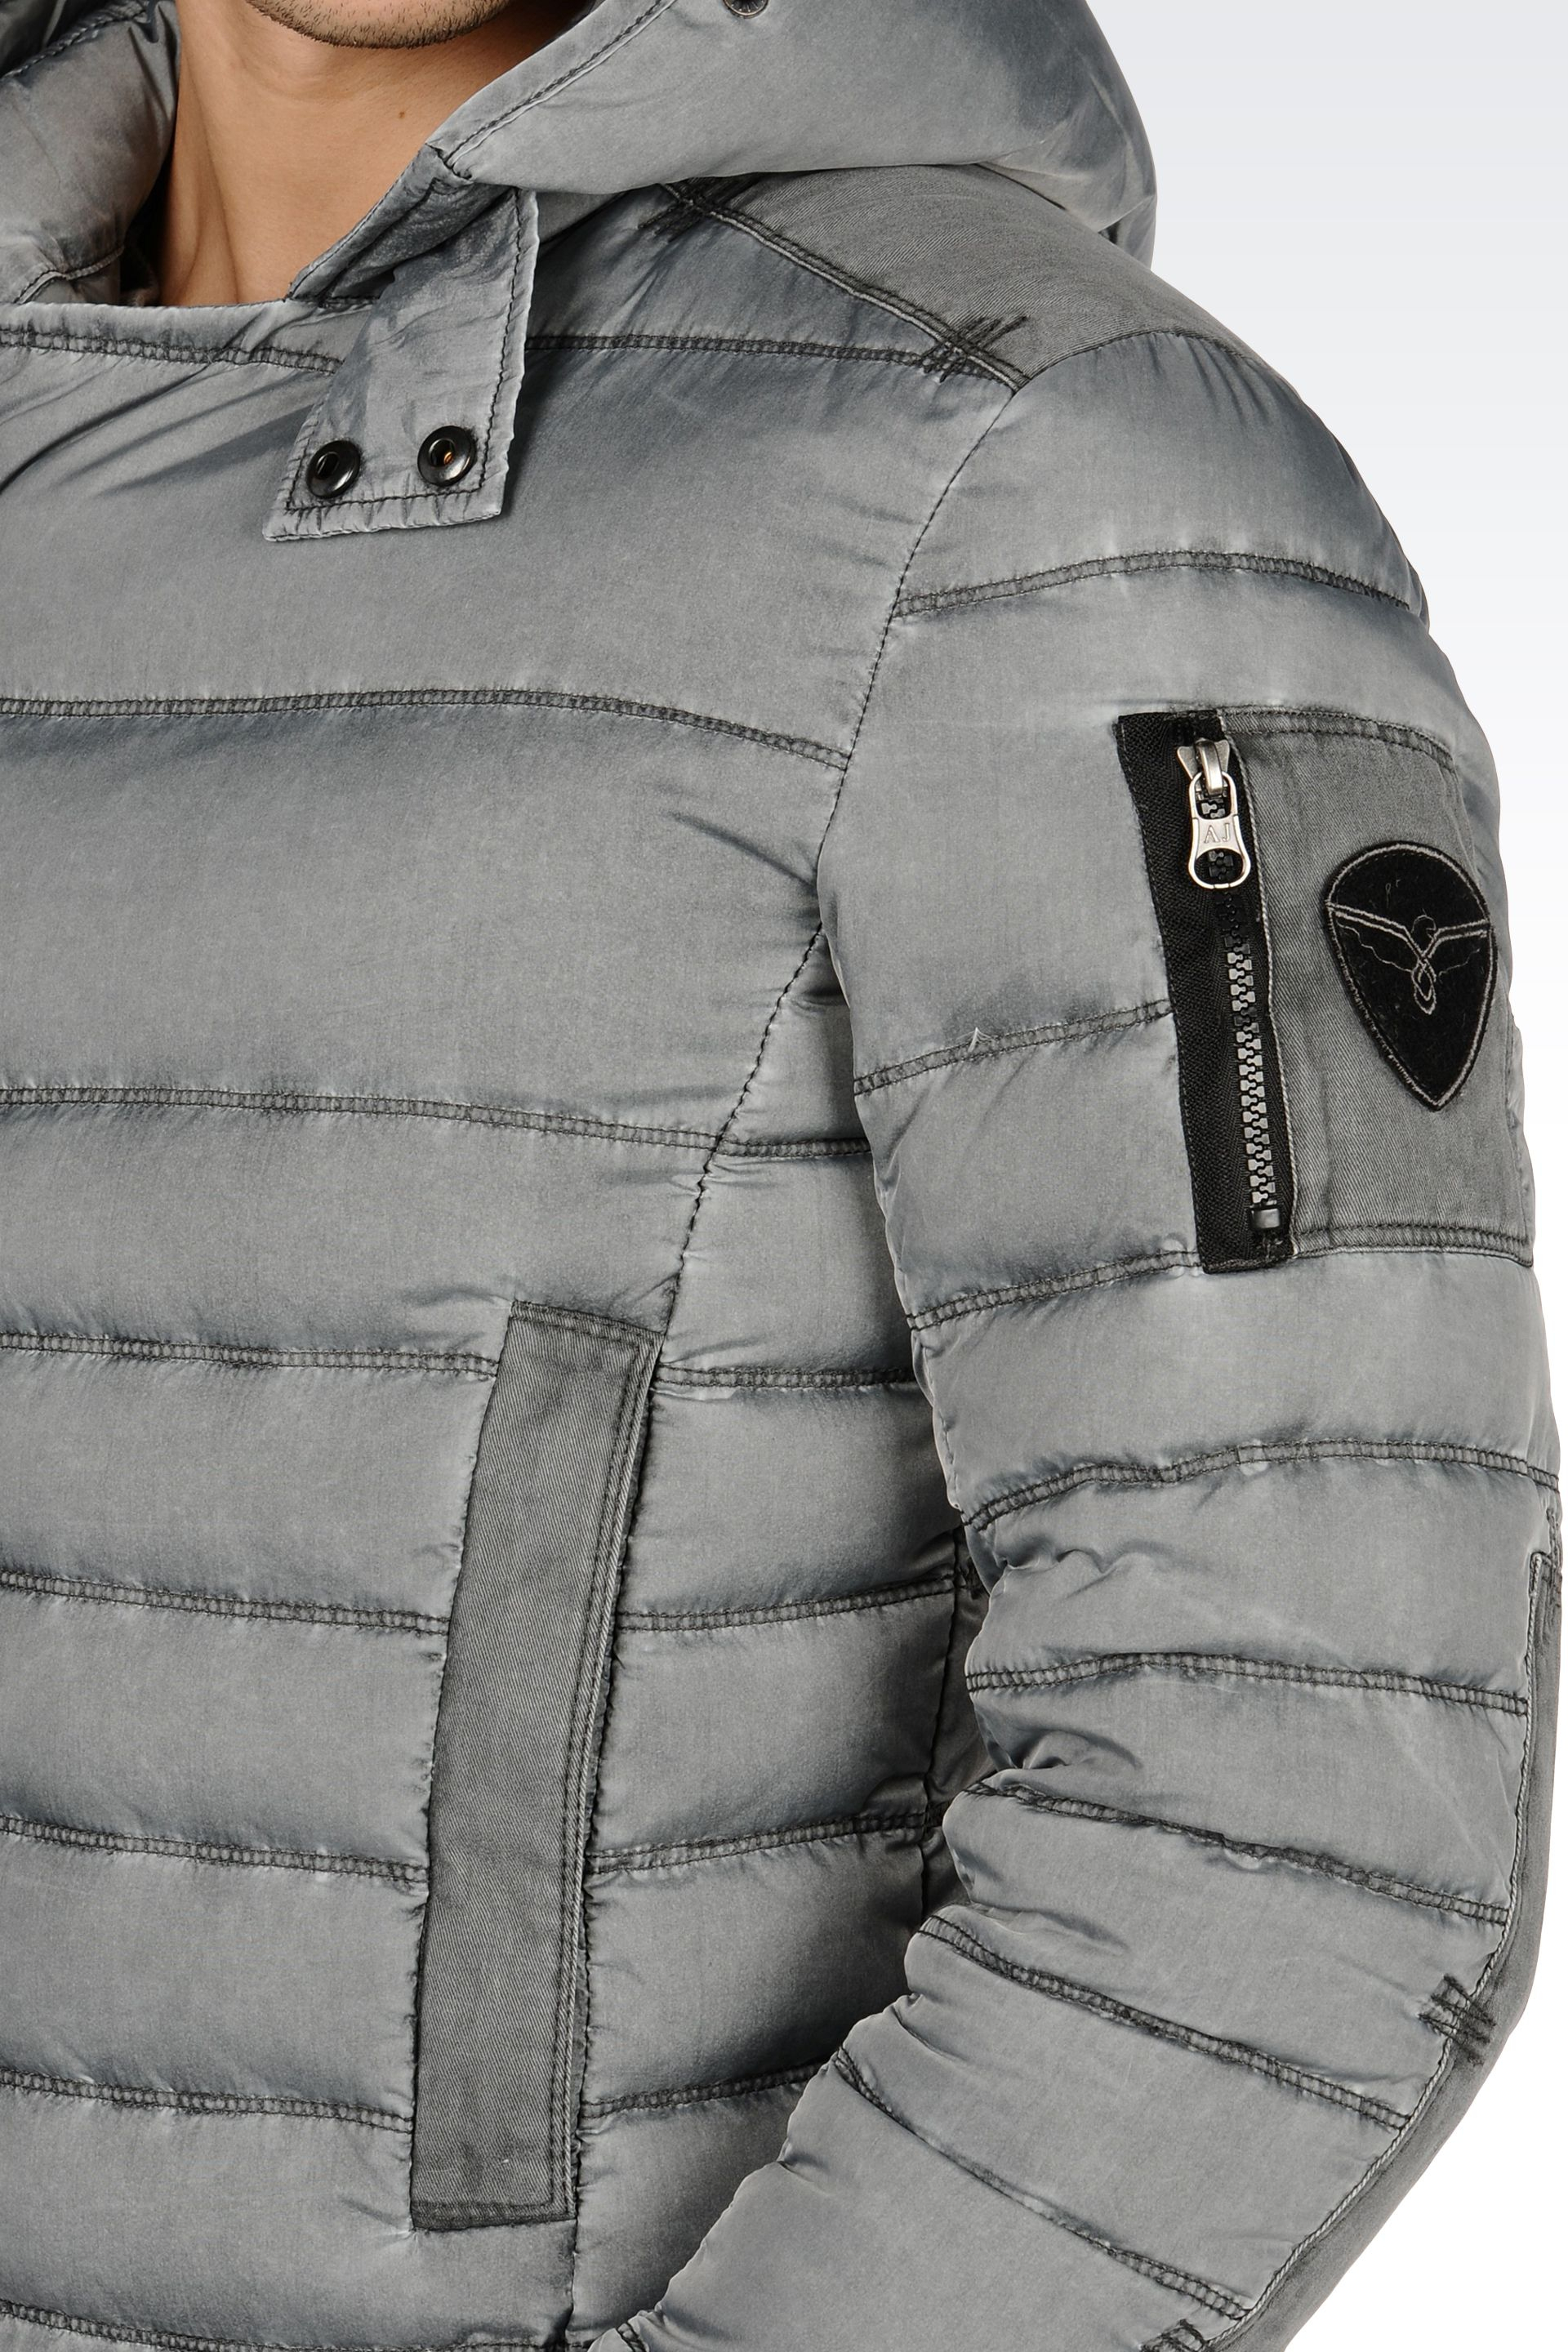 Armani Jeans Puffer Jacket Mens Shop, SAVE 50%.